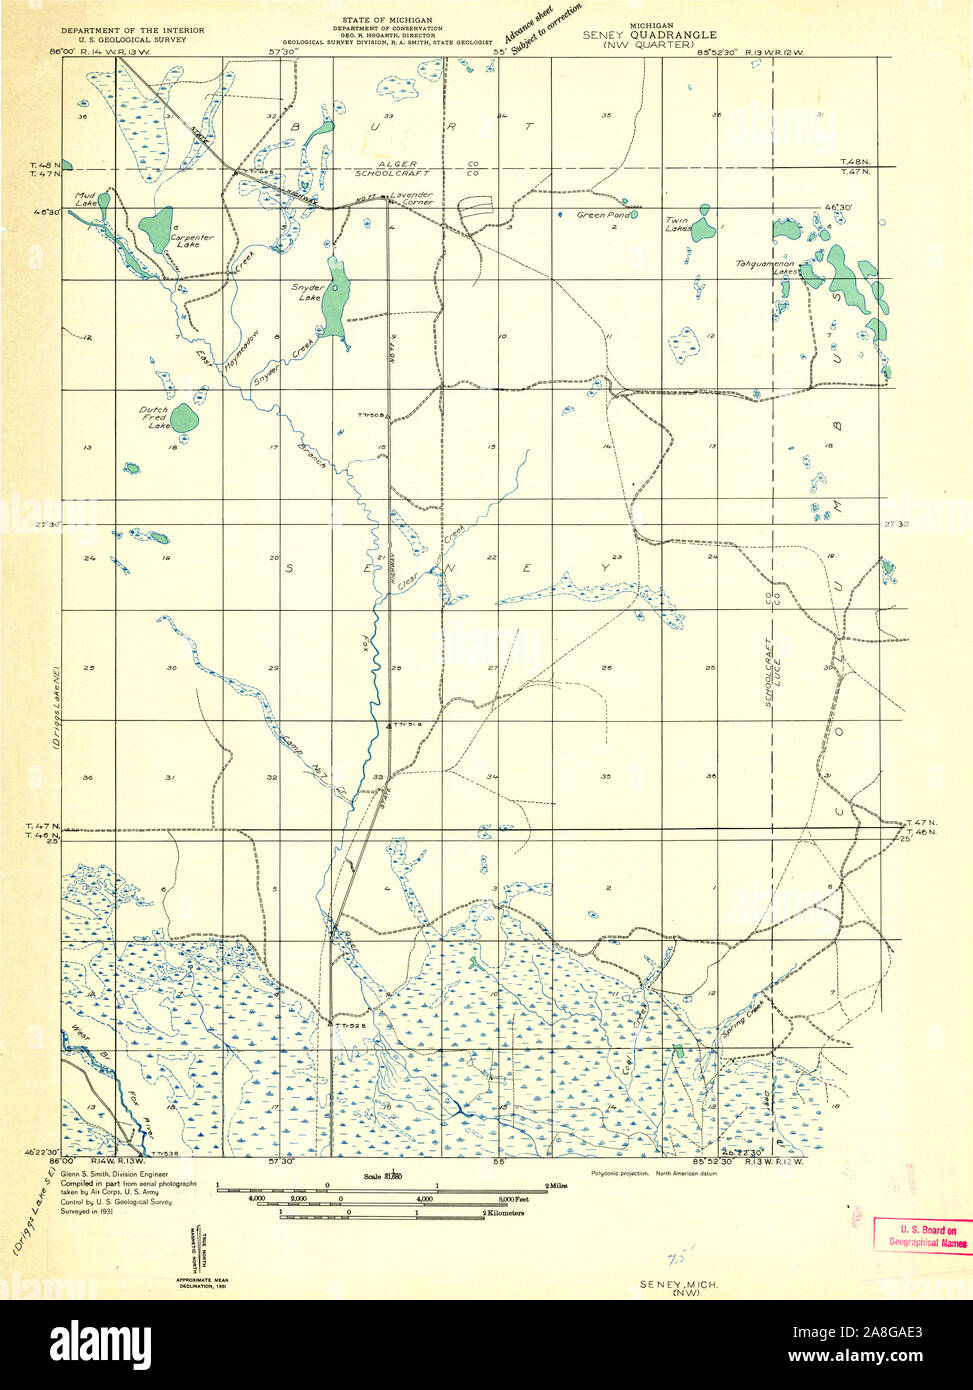 USGS TOPO Map Michigan MI Seney NW 277909 1931 31680 Stock Photo